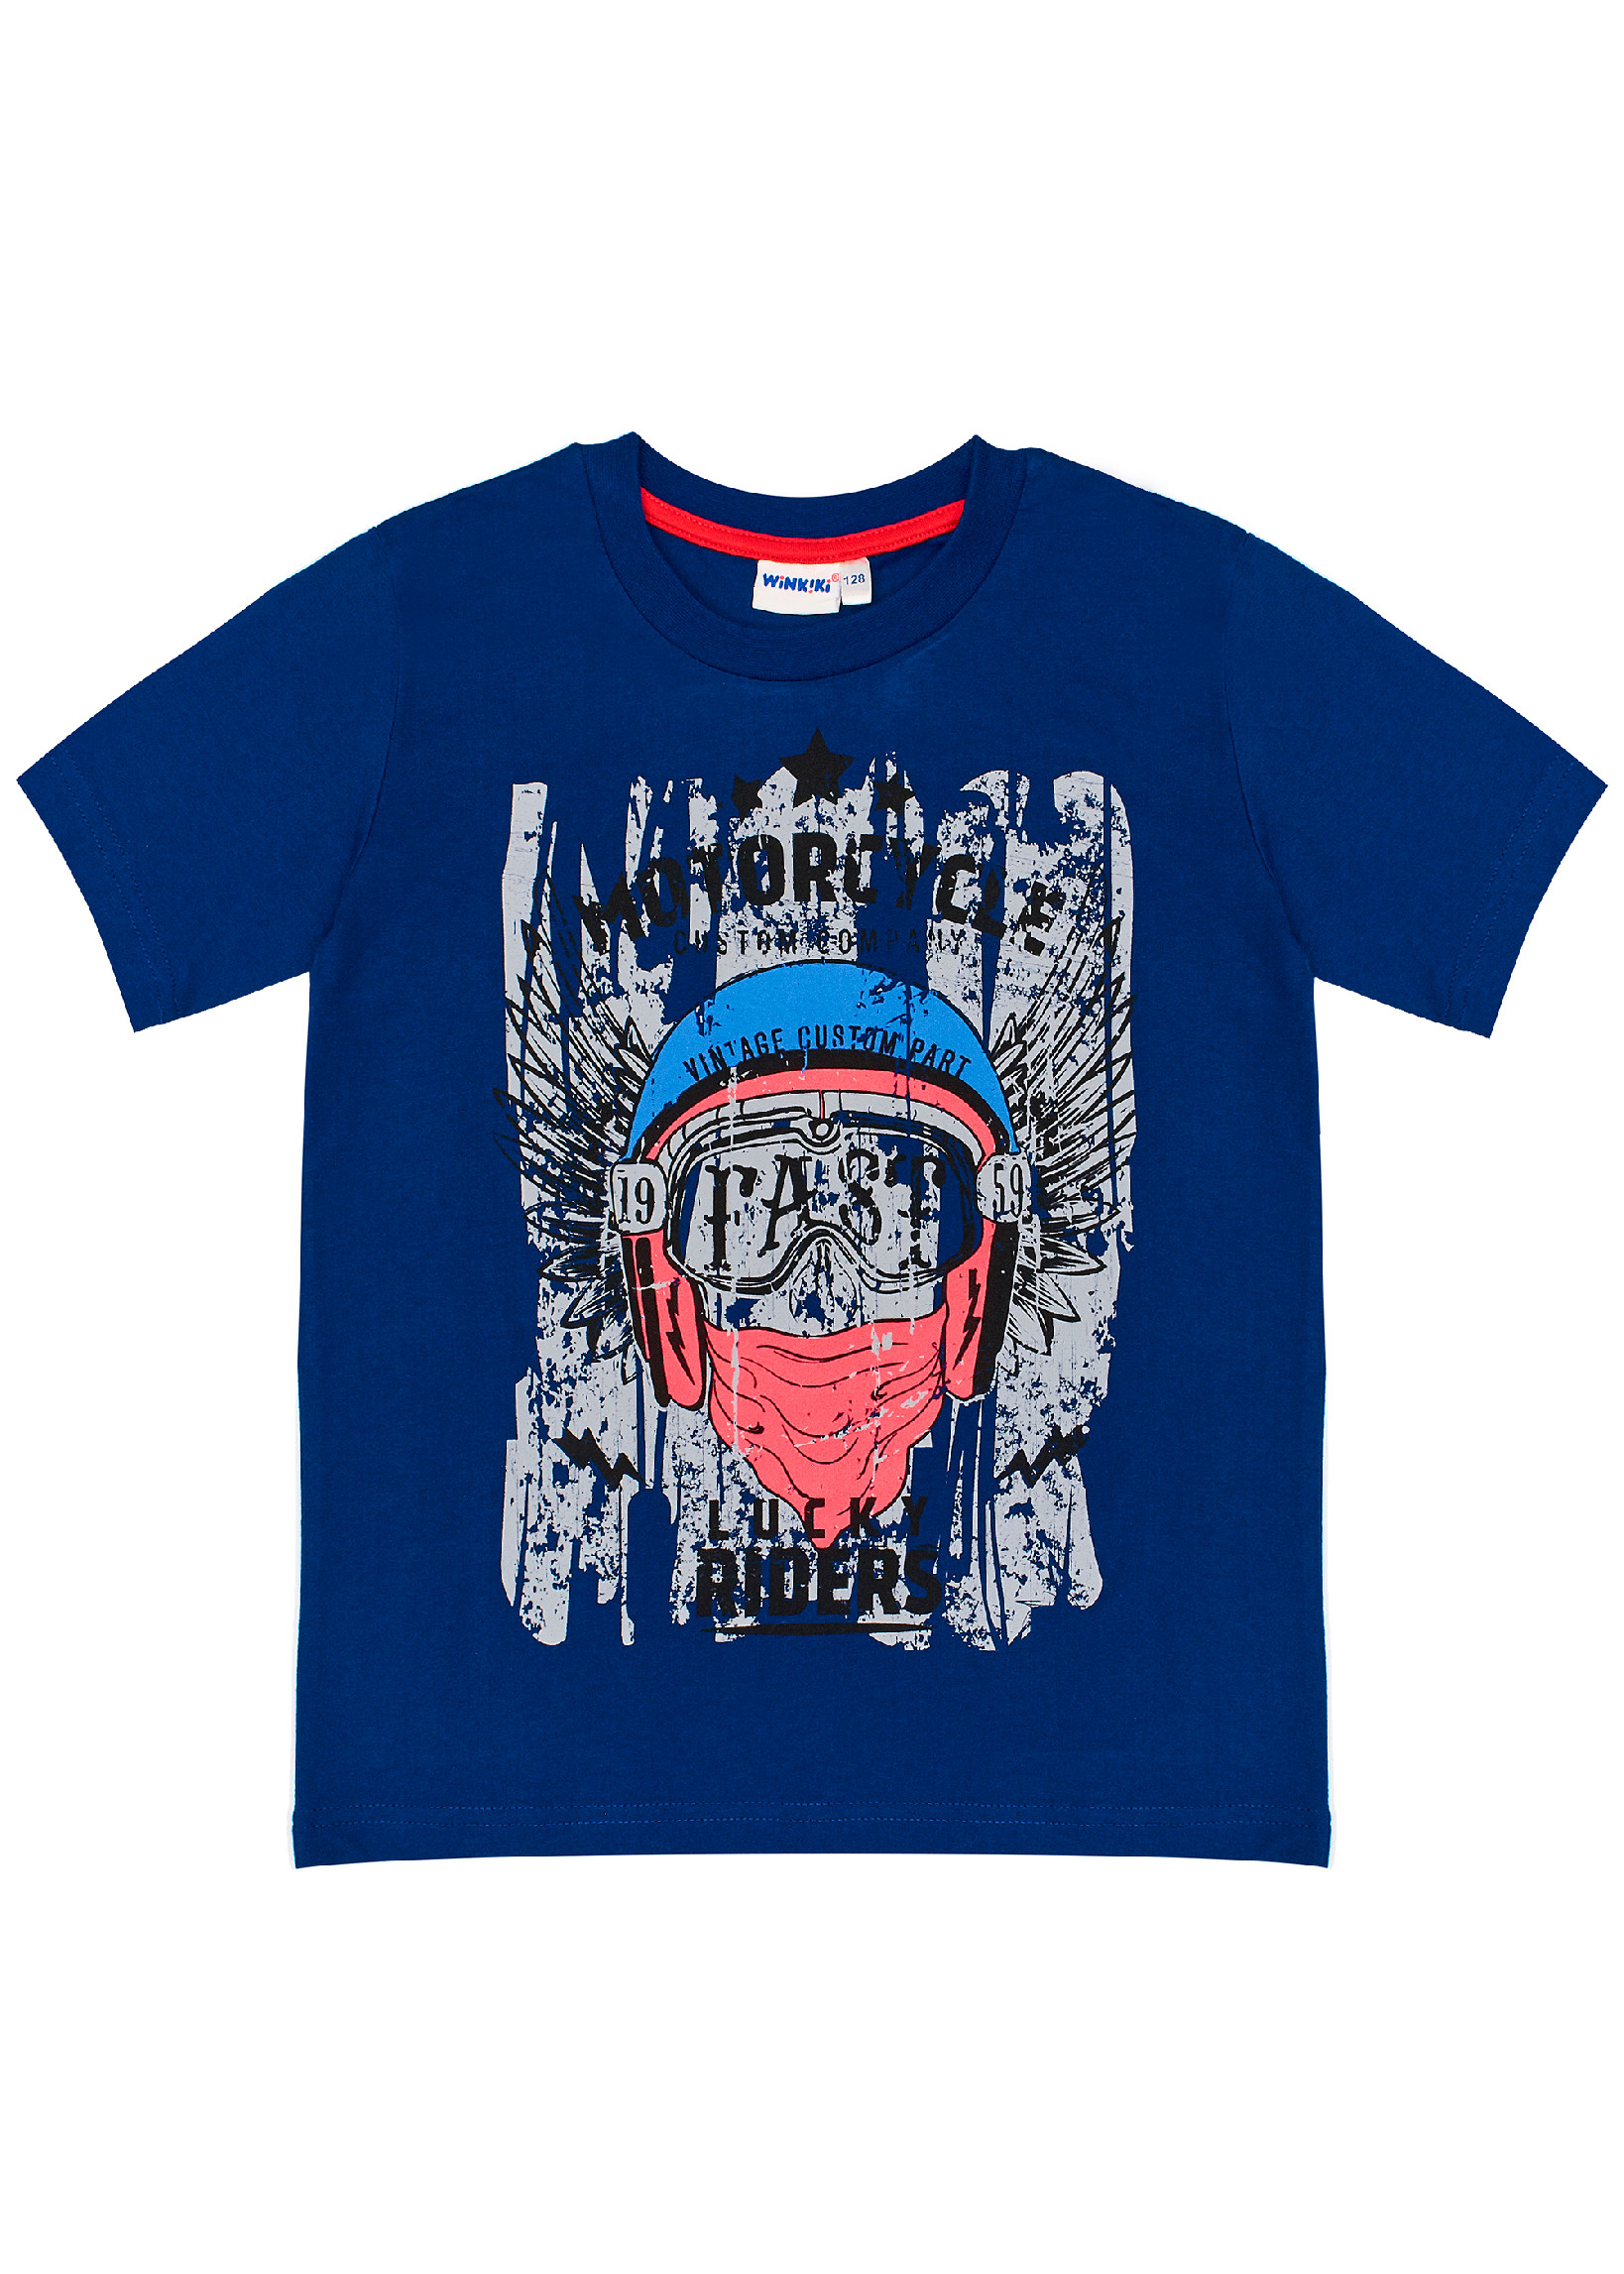 Chlapecké triko - Winkiki WJB 91380, tmavě modrá Barva: Modrá, Velikost: 140